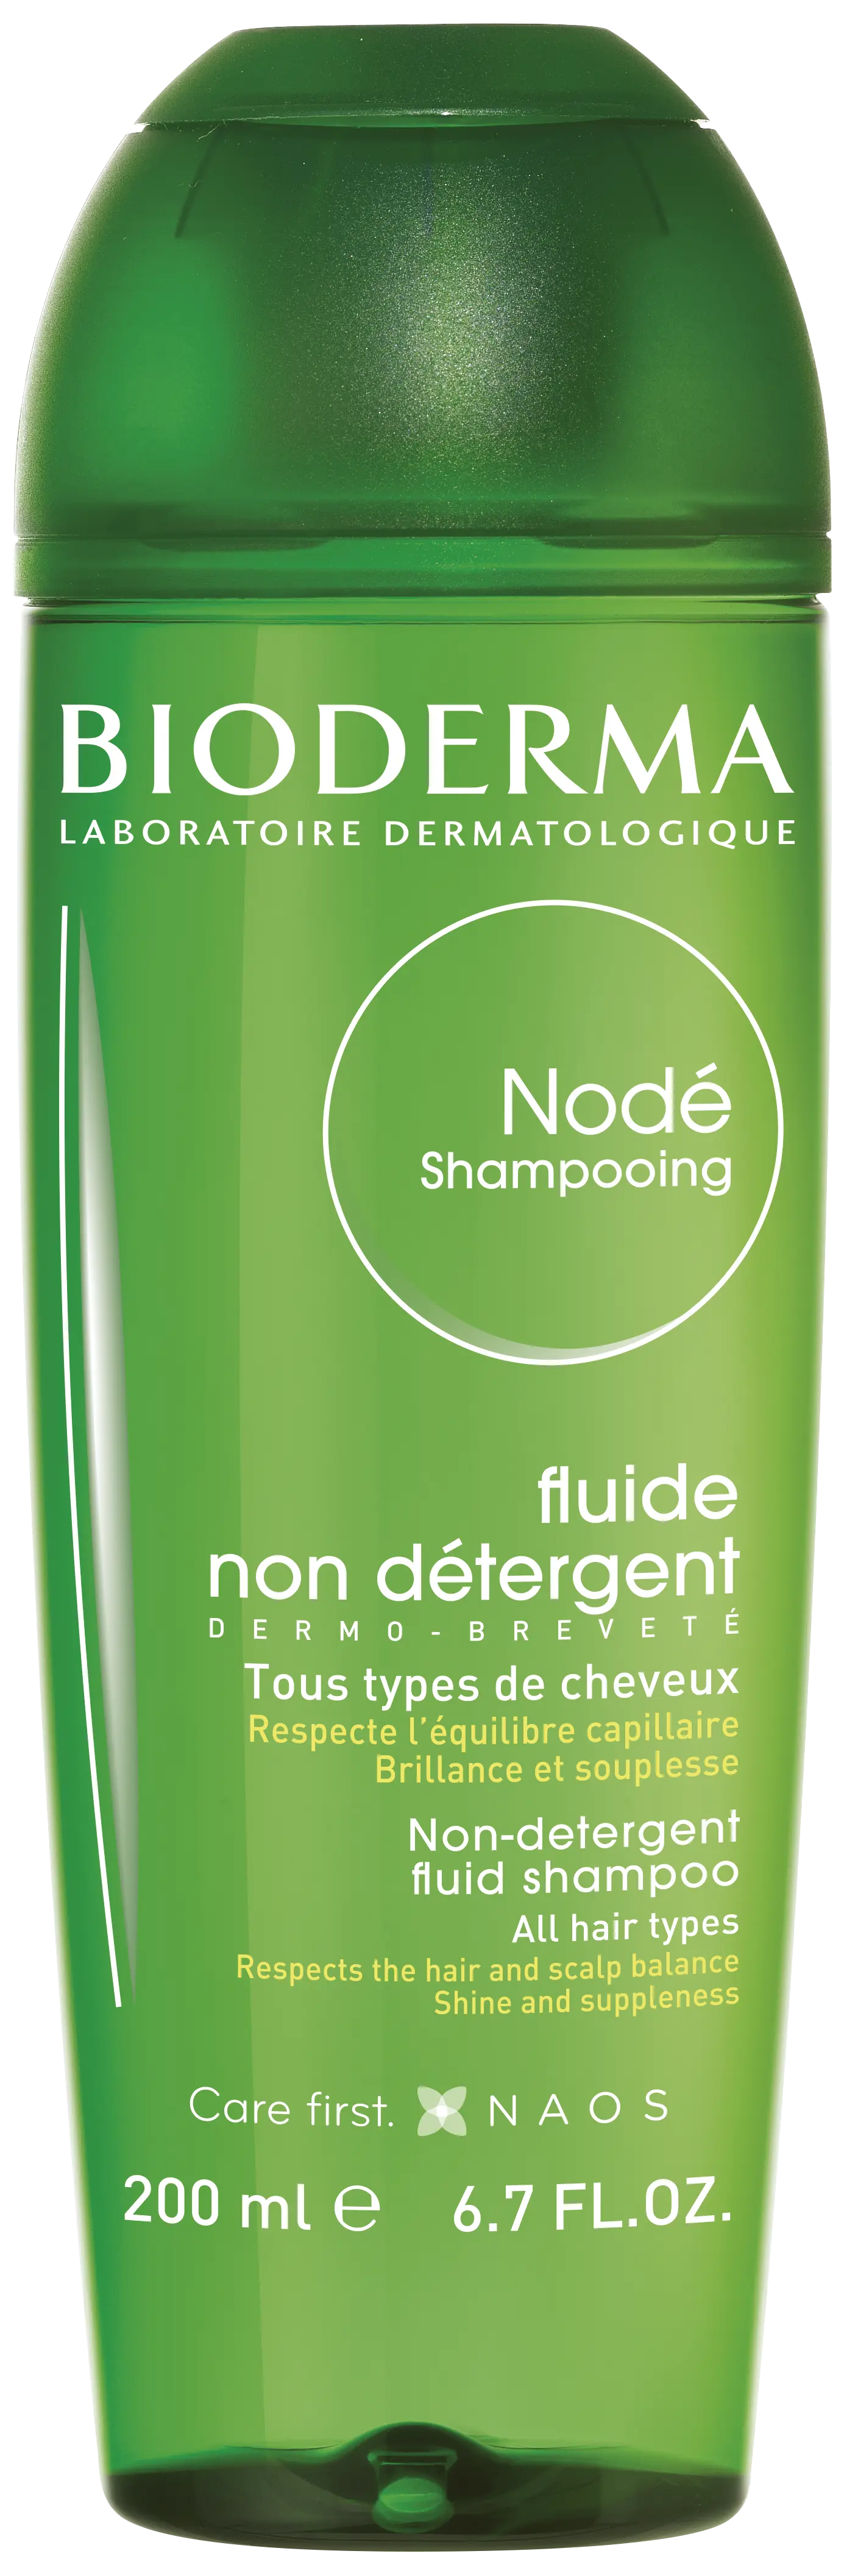 Bioderma Nodé Fluid Shampoo 200 ml